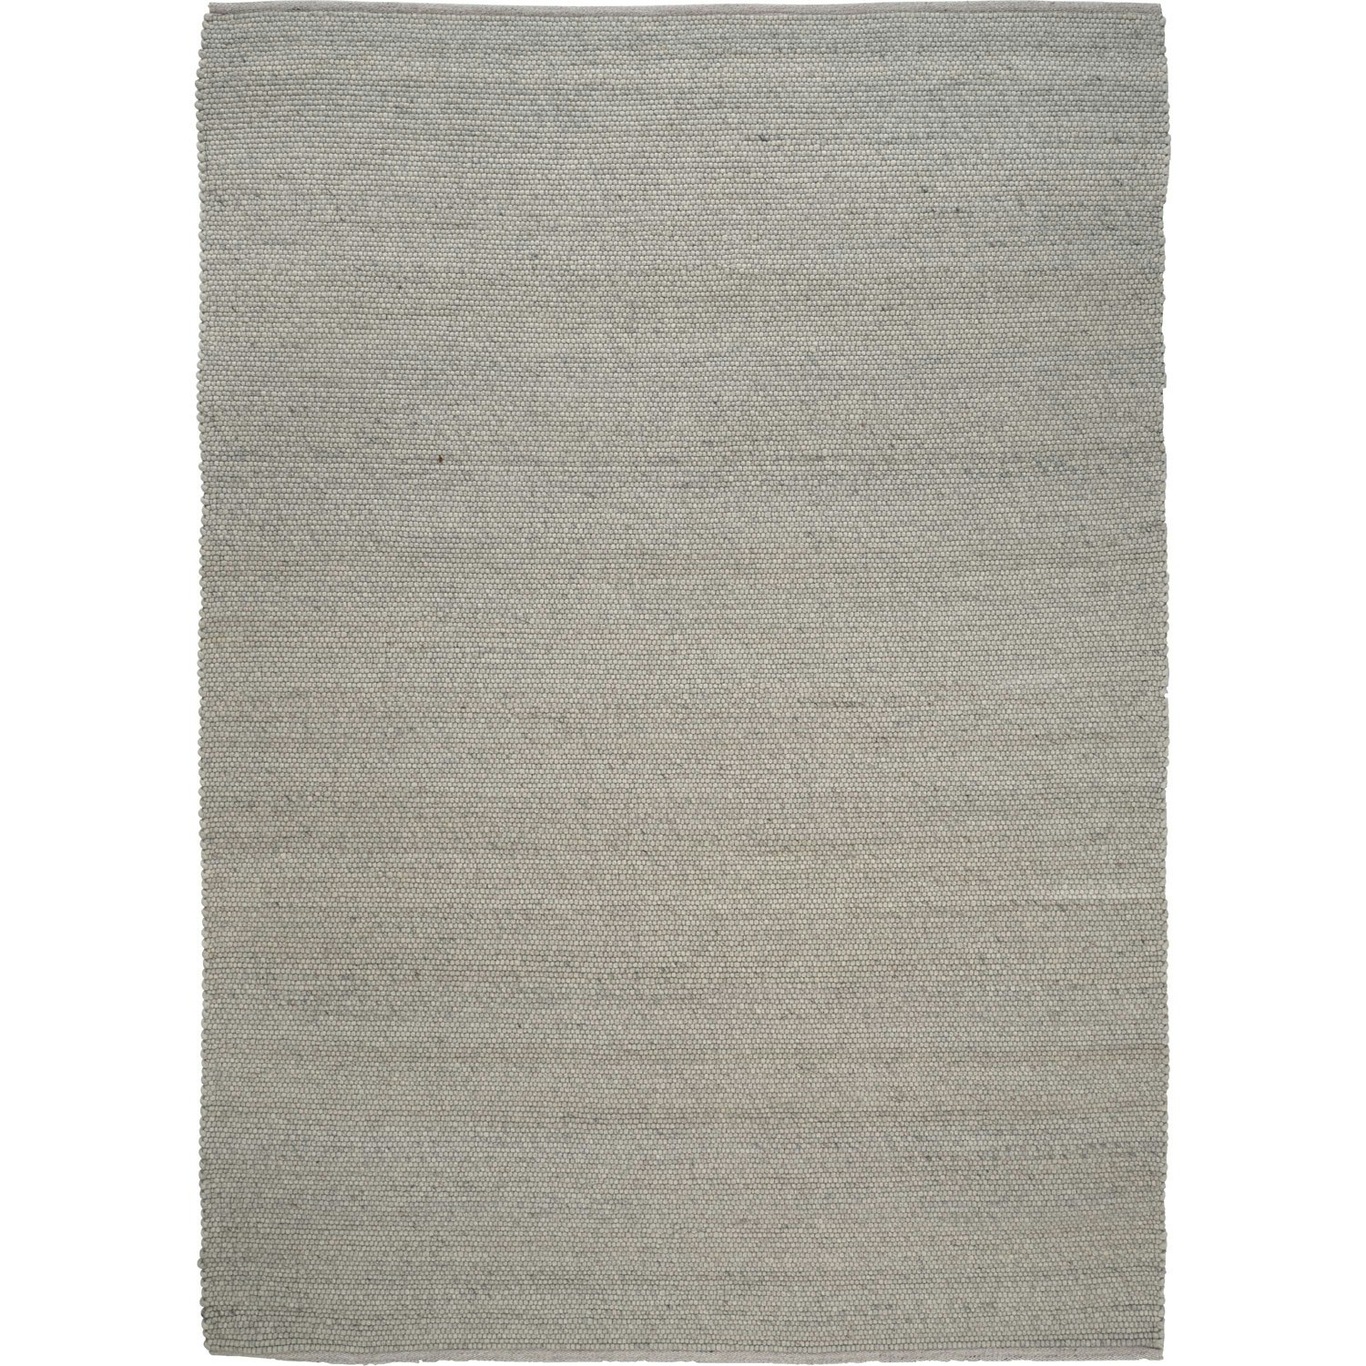 Merino Rug 300x400 cm, Concrete